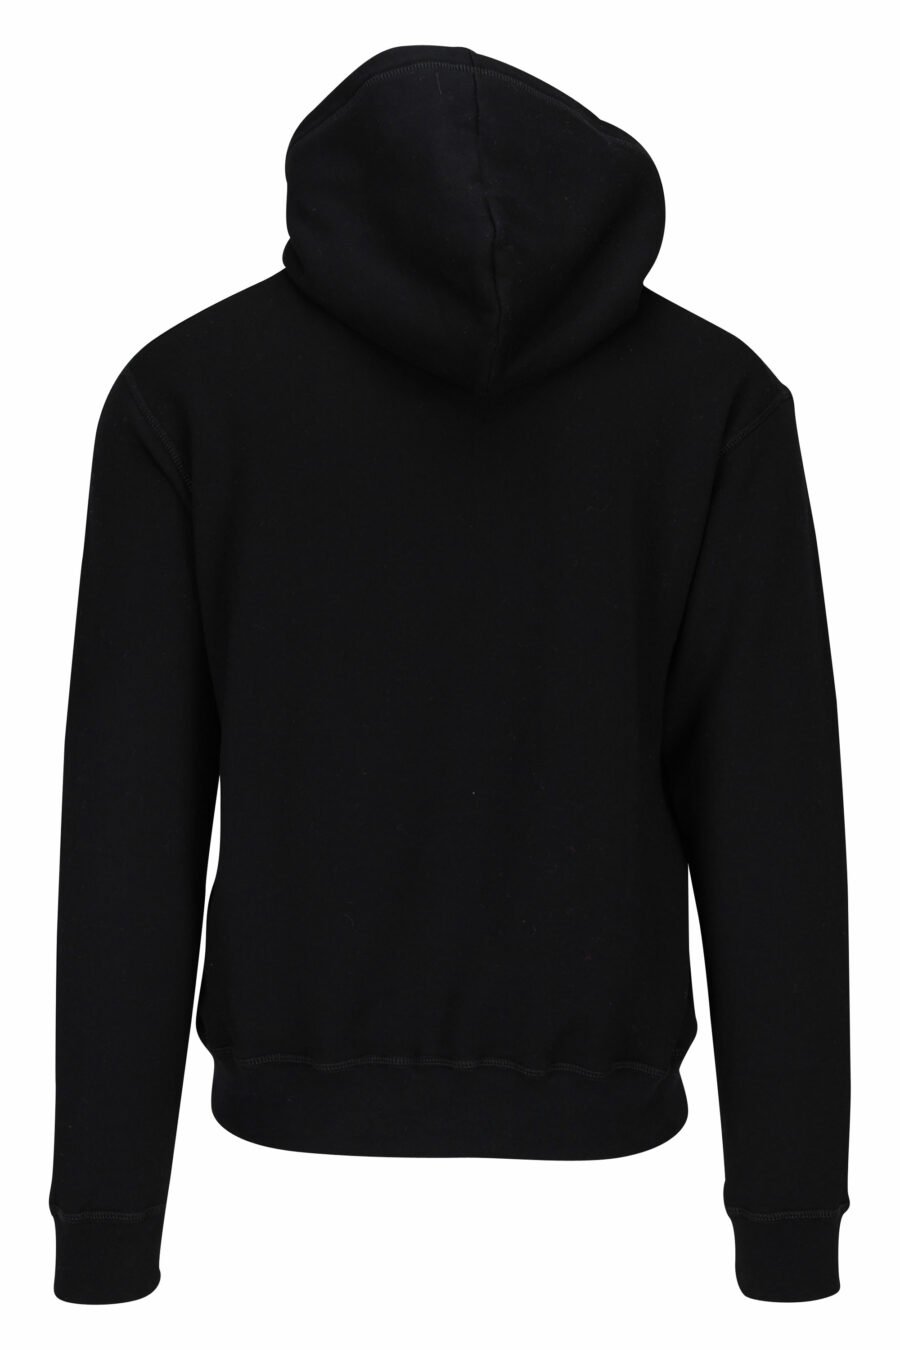 Black hooded sweatshirt with square "icon" maxilogo - 8052134982648 1